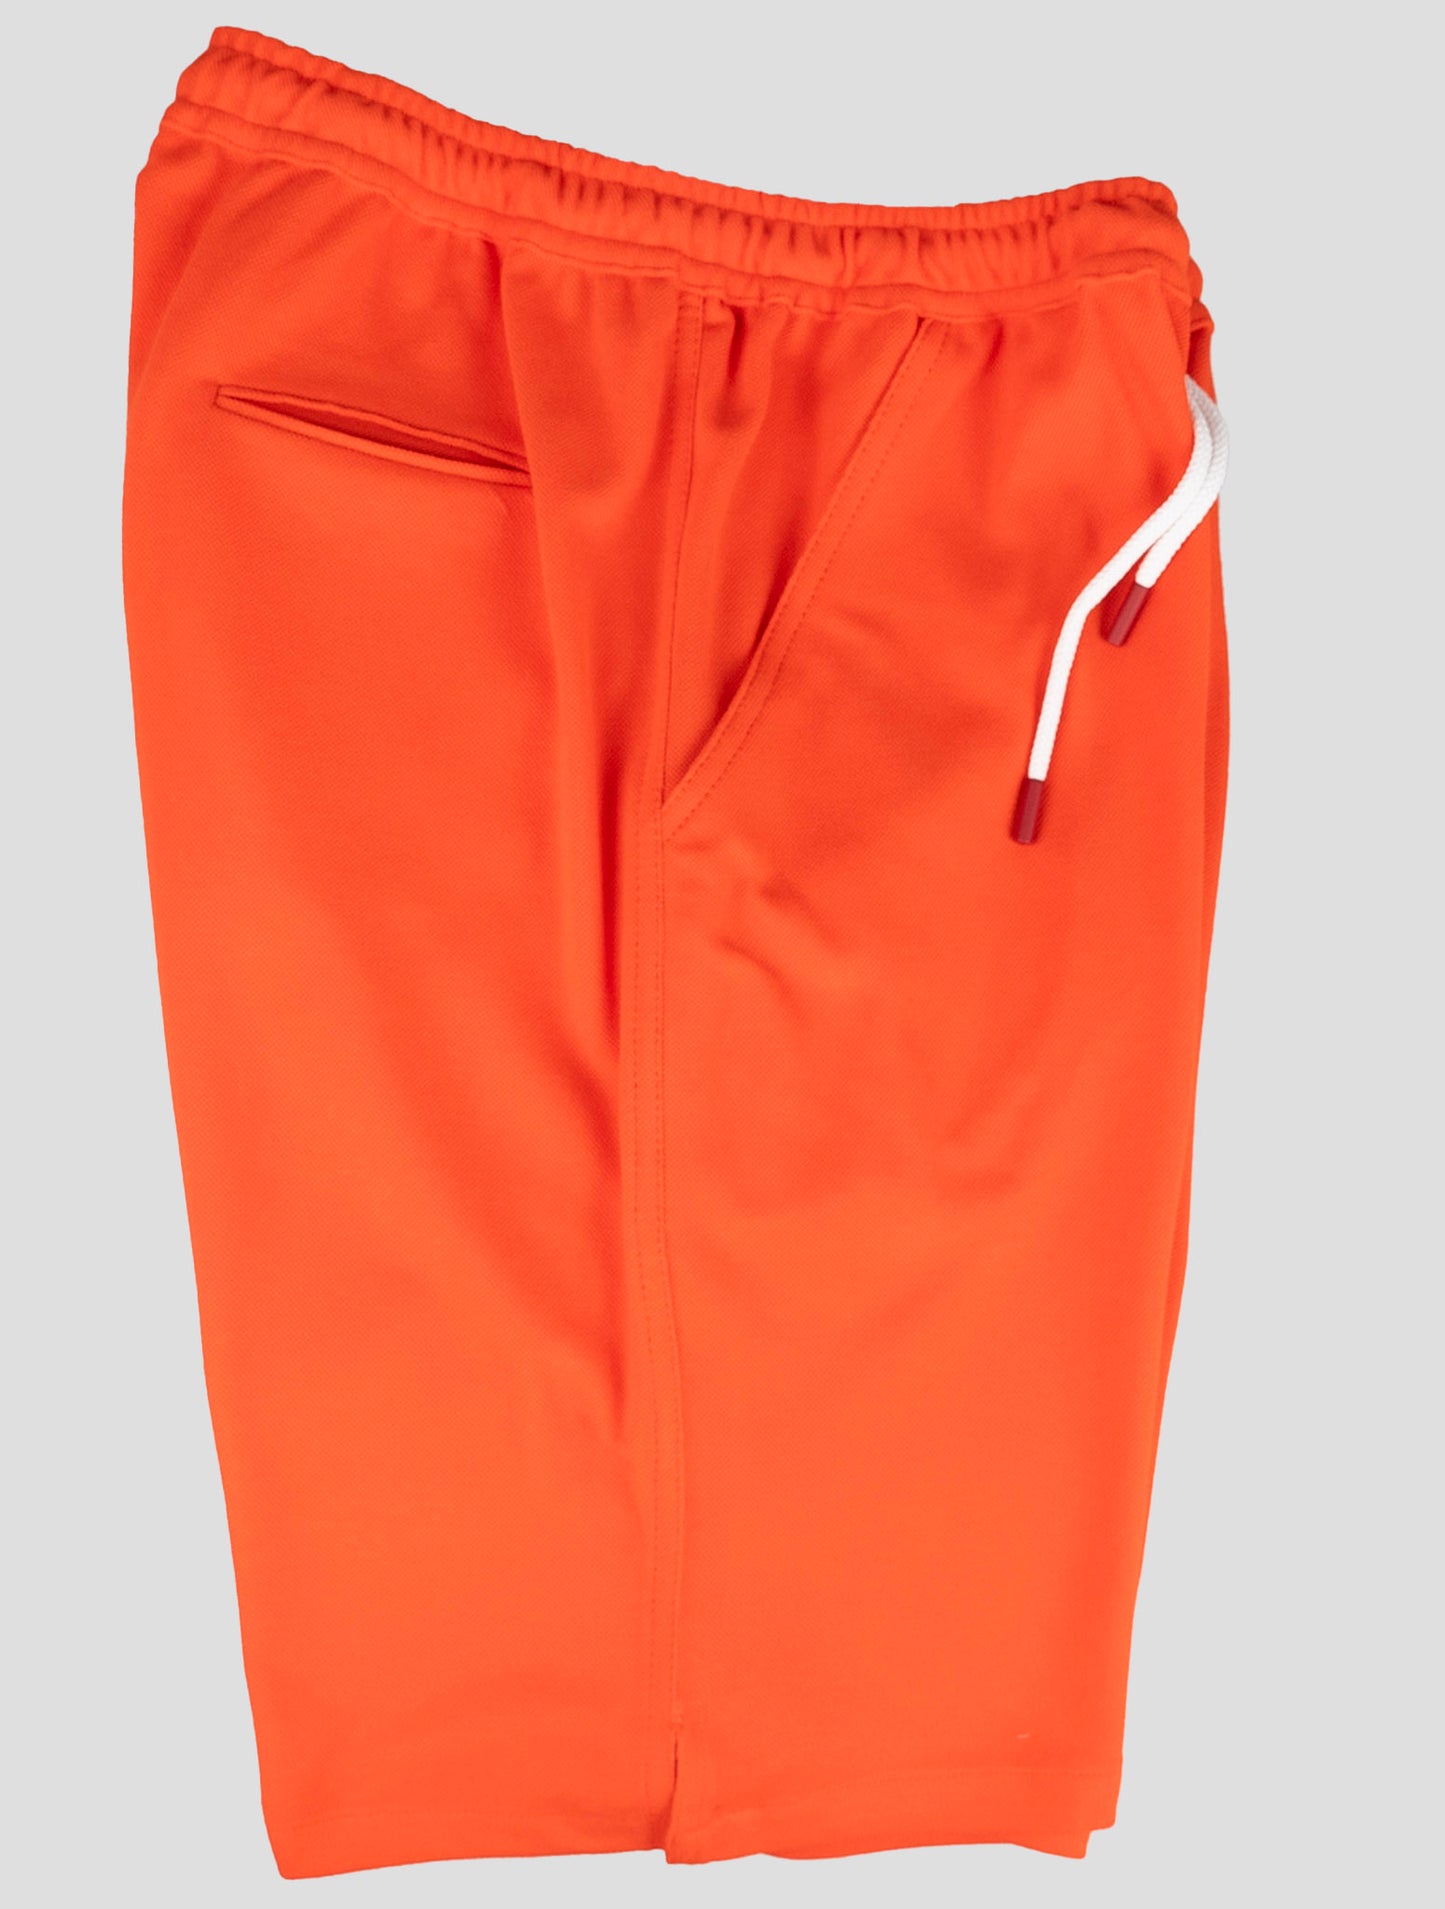 Traje a juego de Kiton-azul Umbi y naranja pantalones cortos chándal